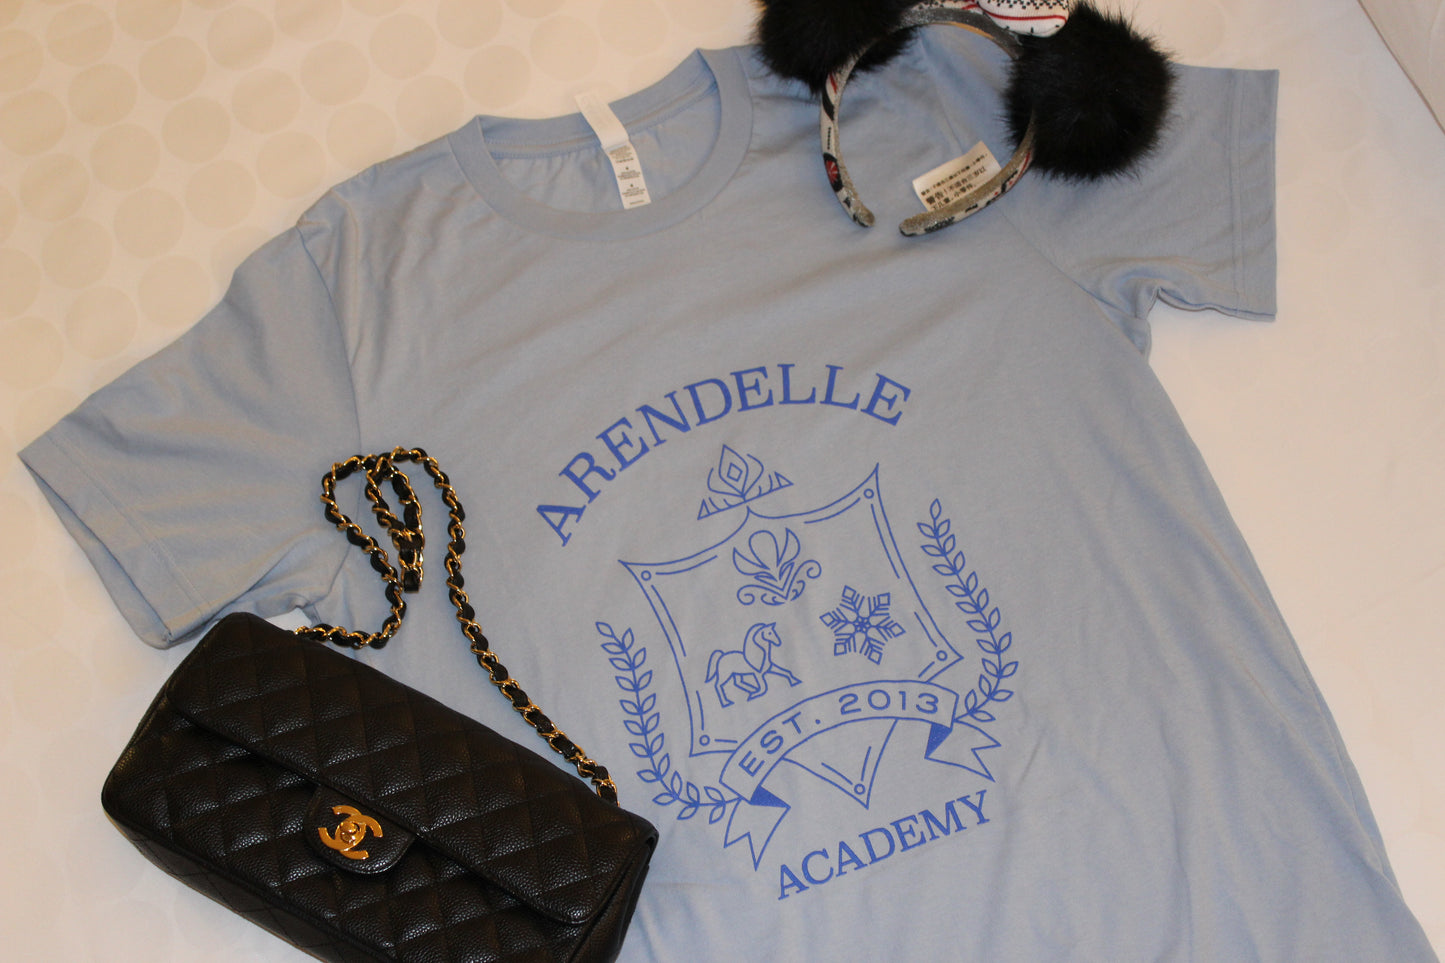 Arendelle Academy